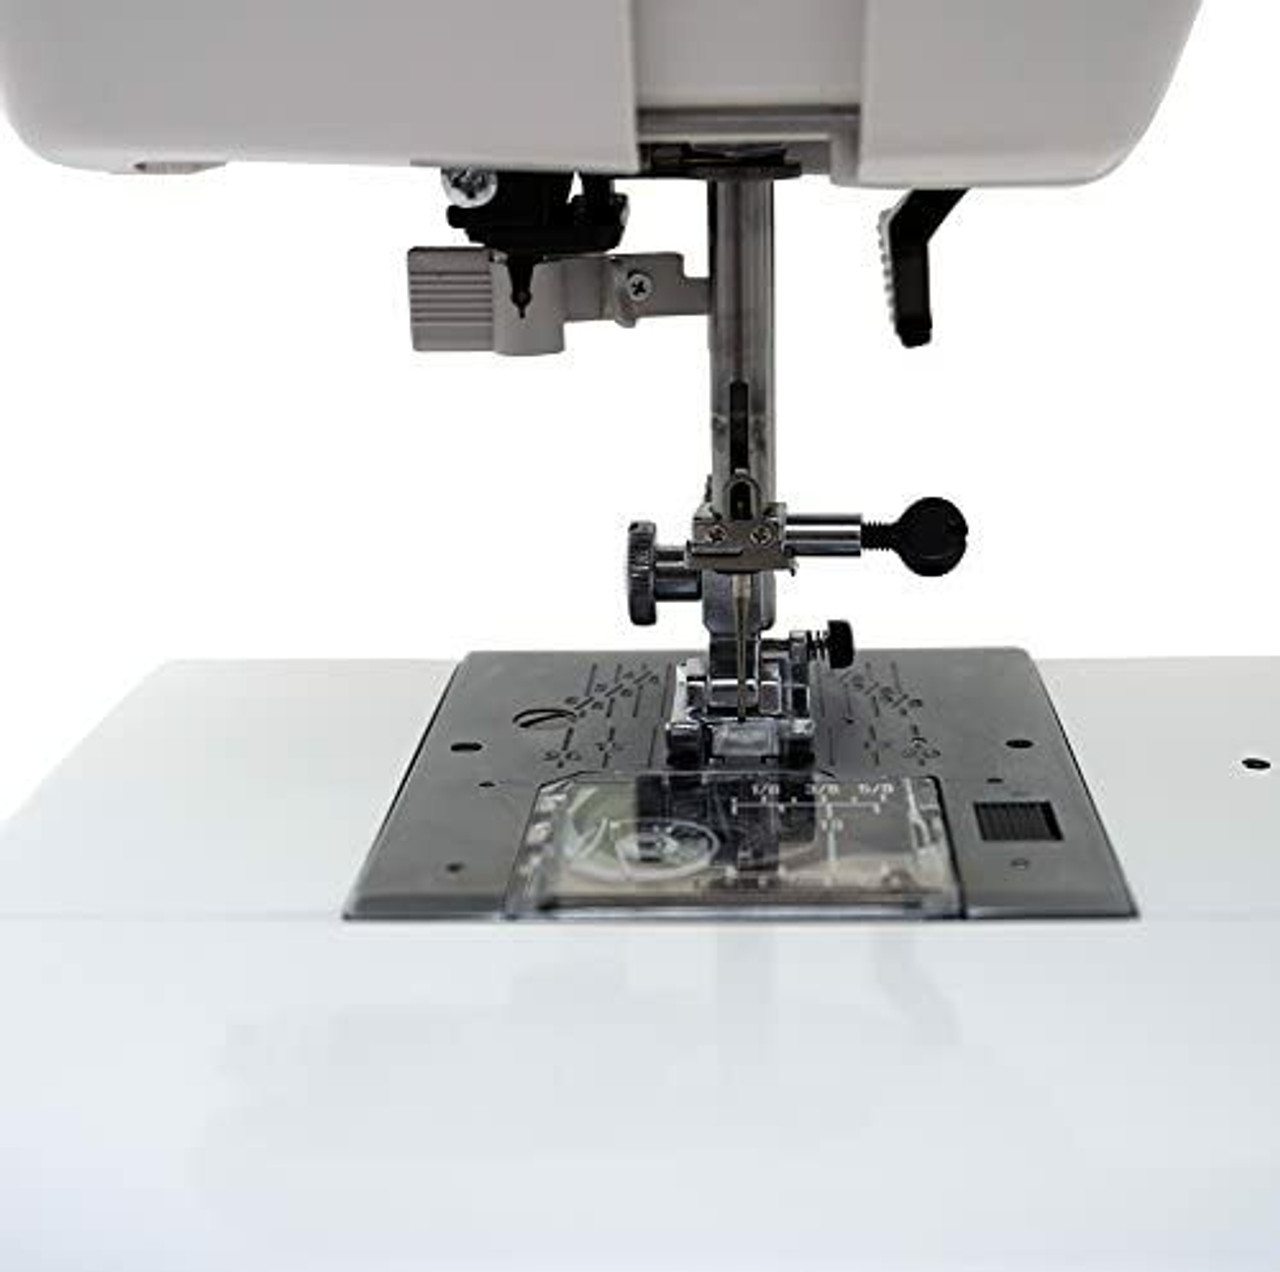 Janome HD1000 Sewing Machine Demo 